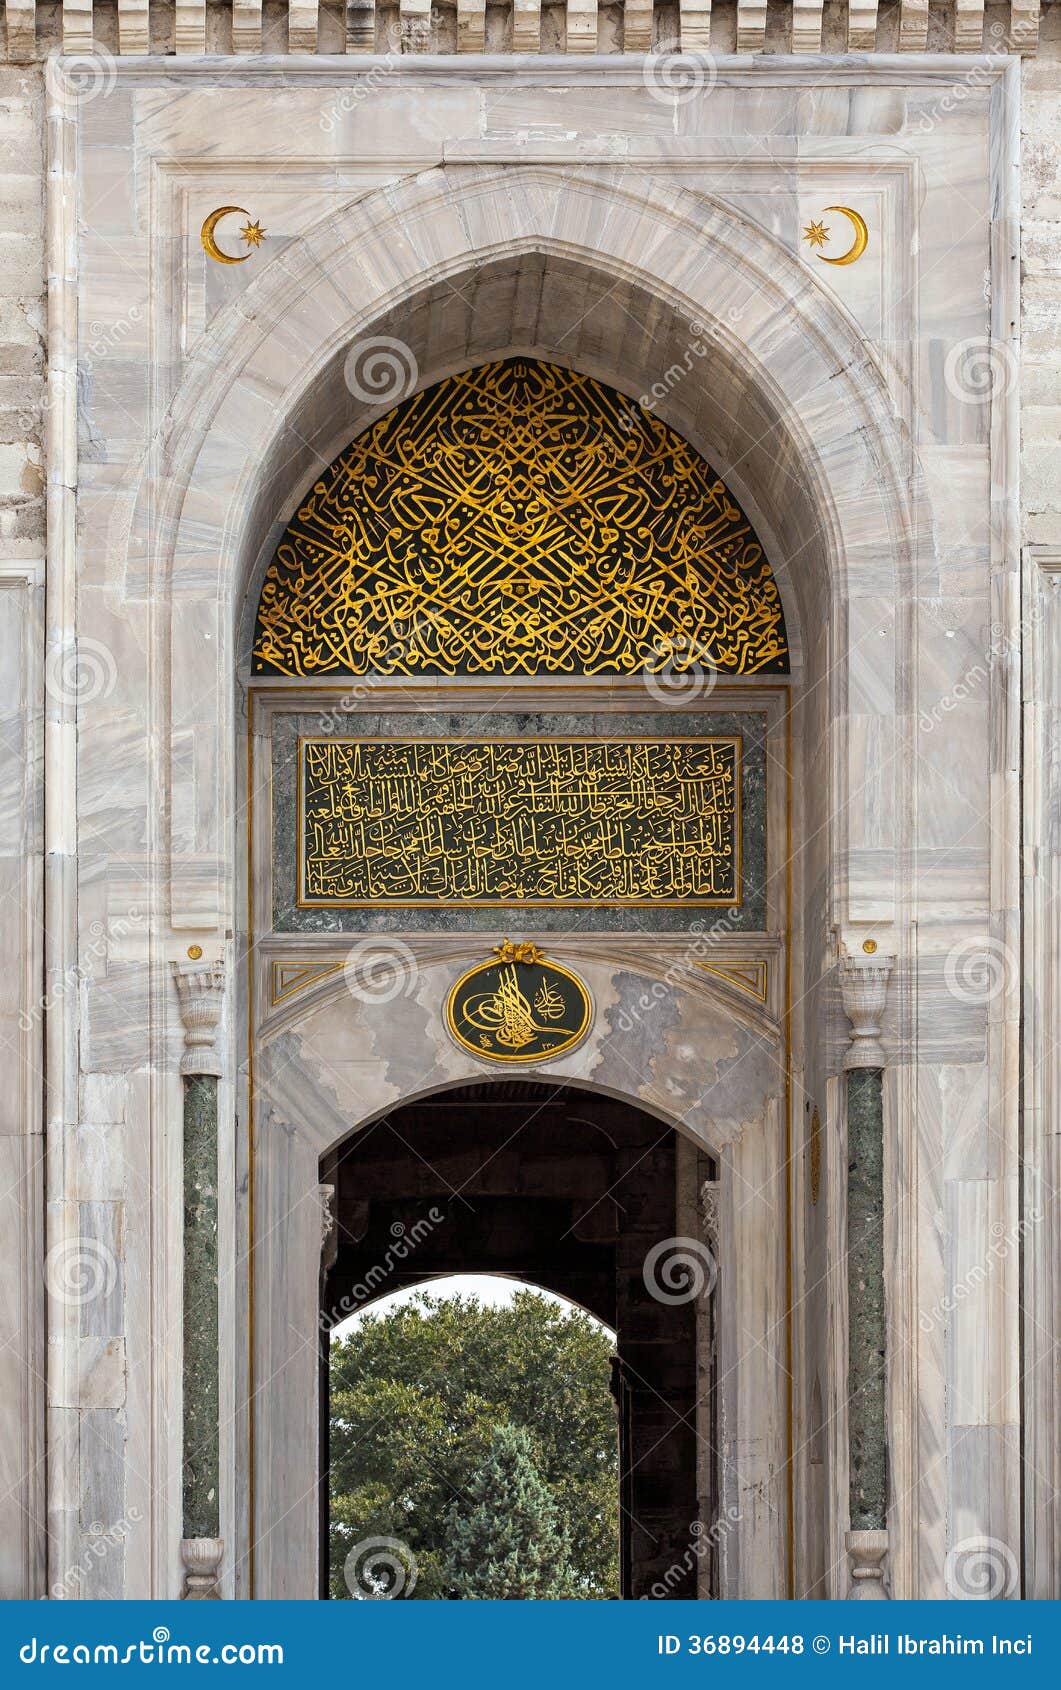 entrance of the topkapi palace detail